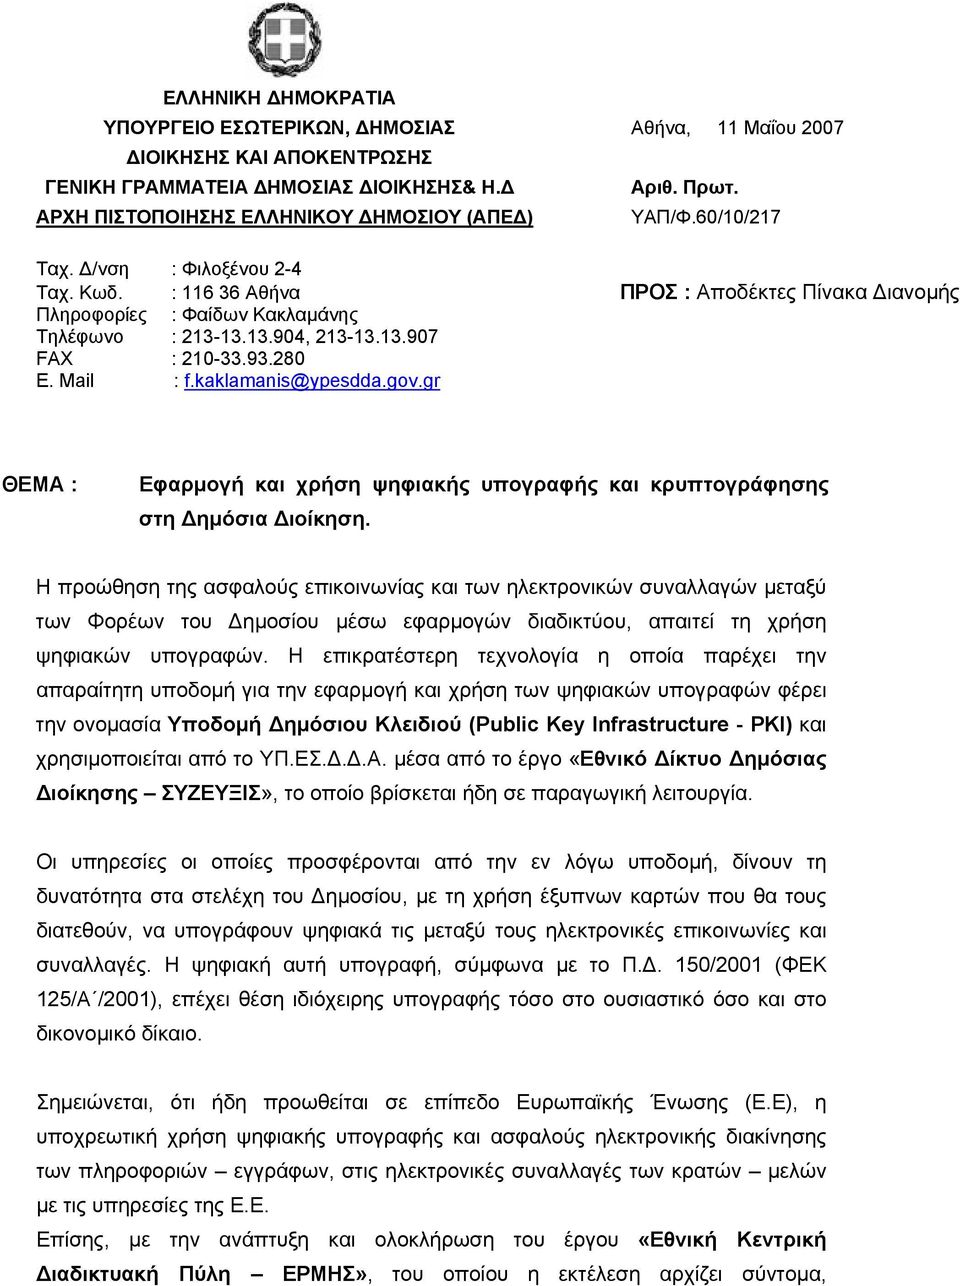 kaklamanis@ypesdda.gov.gr ΘΕΜΑ : Εφαρµογή και χρήση ψηφιακής υπογραφής και κρυπτογράφησης στη ηµόσια ιοίκηση.